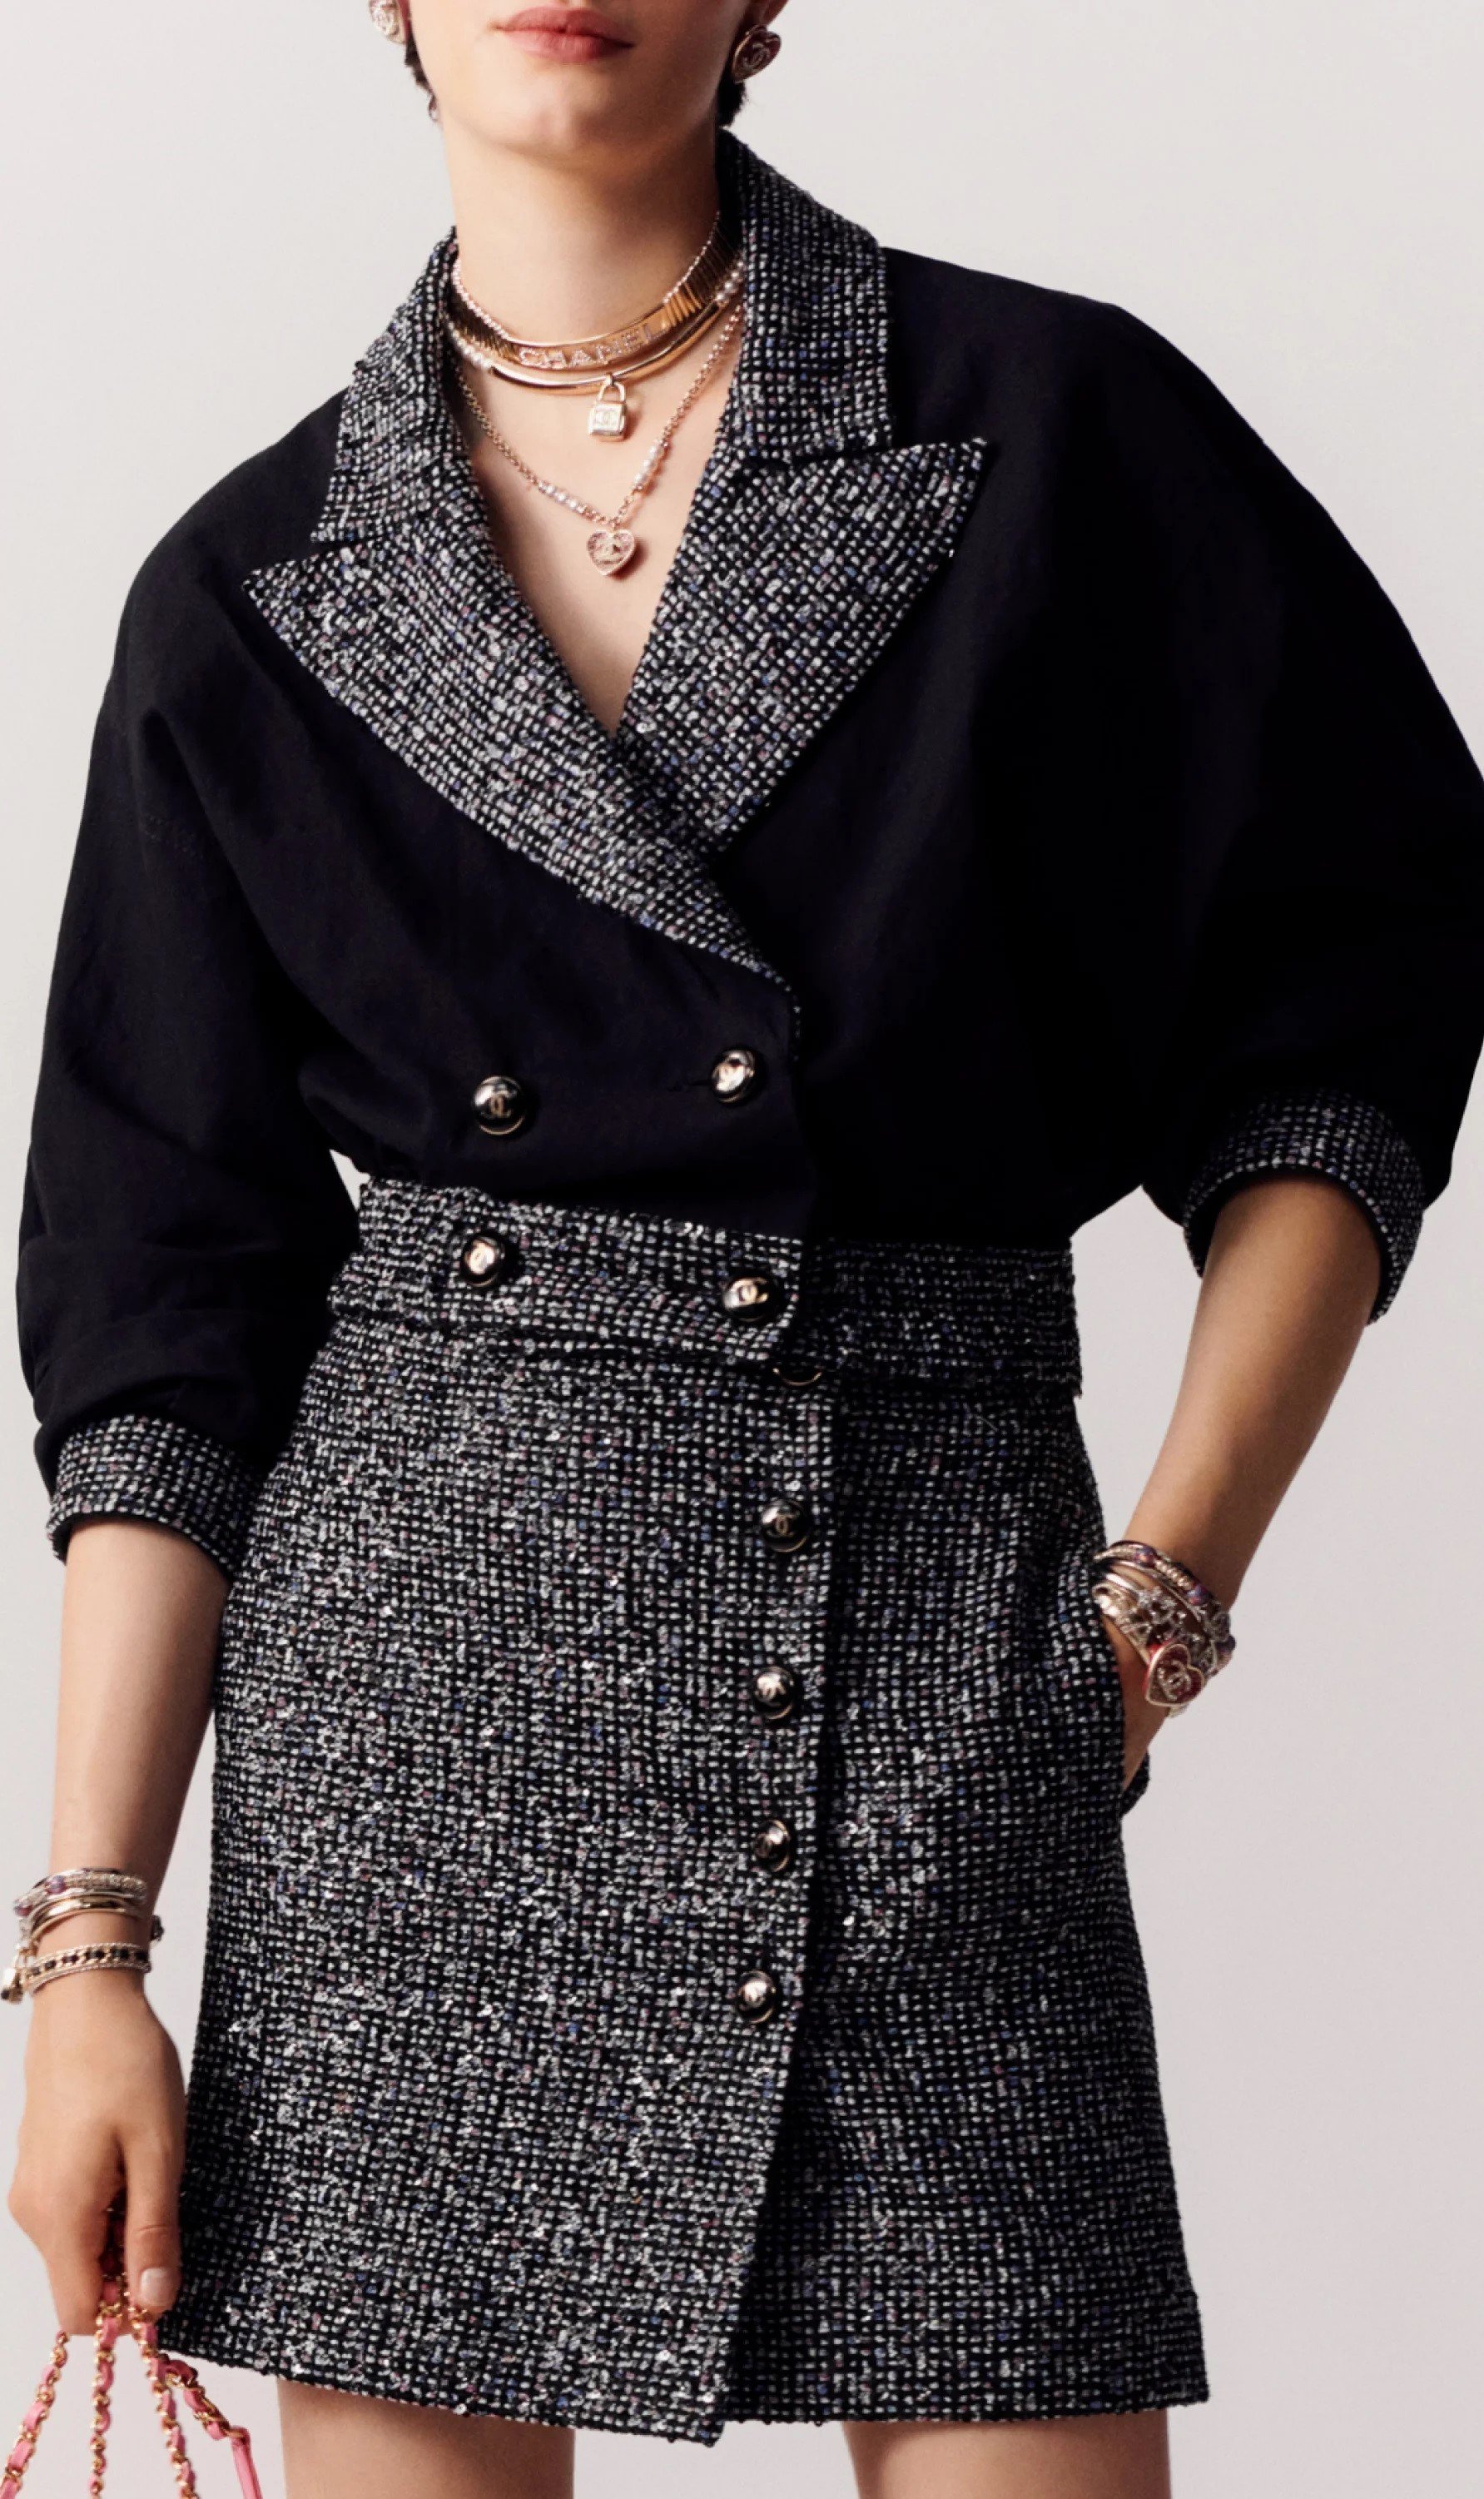 Chanel Oversized Double-Breasted Tweed Jacket.jpg